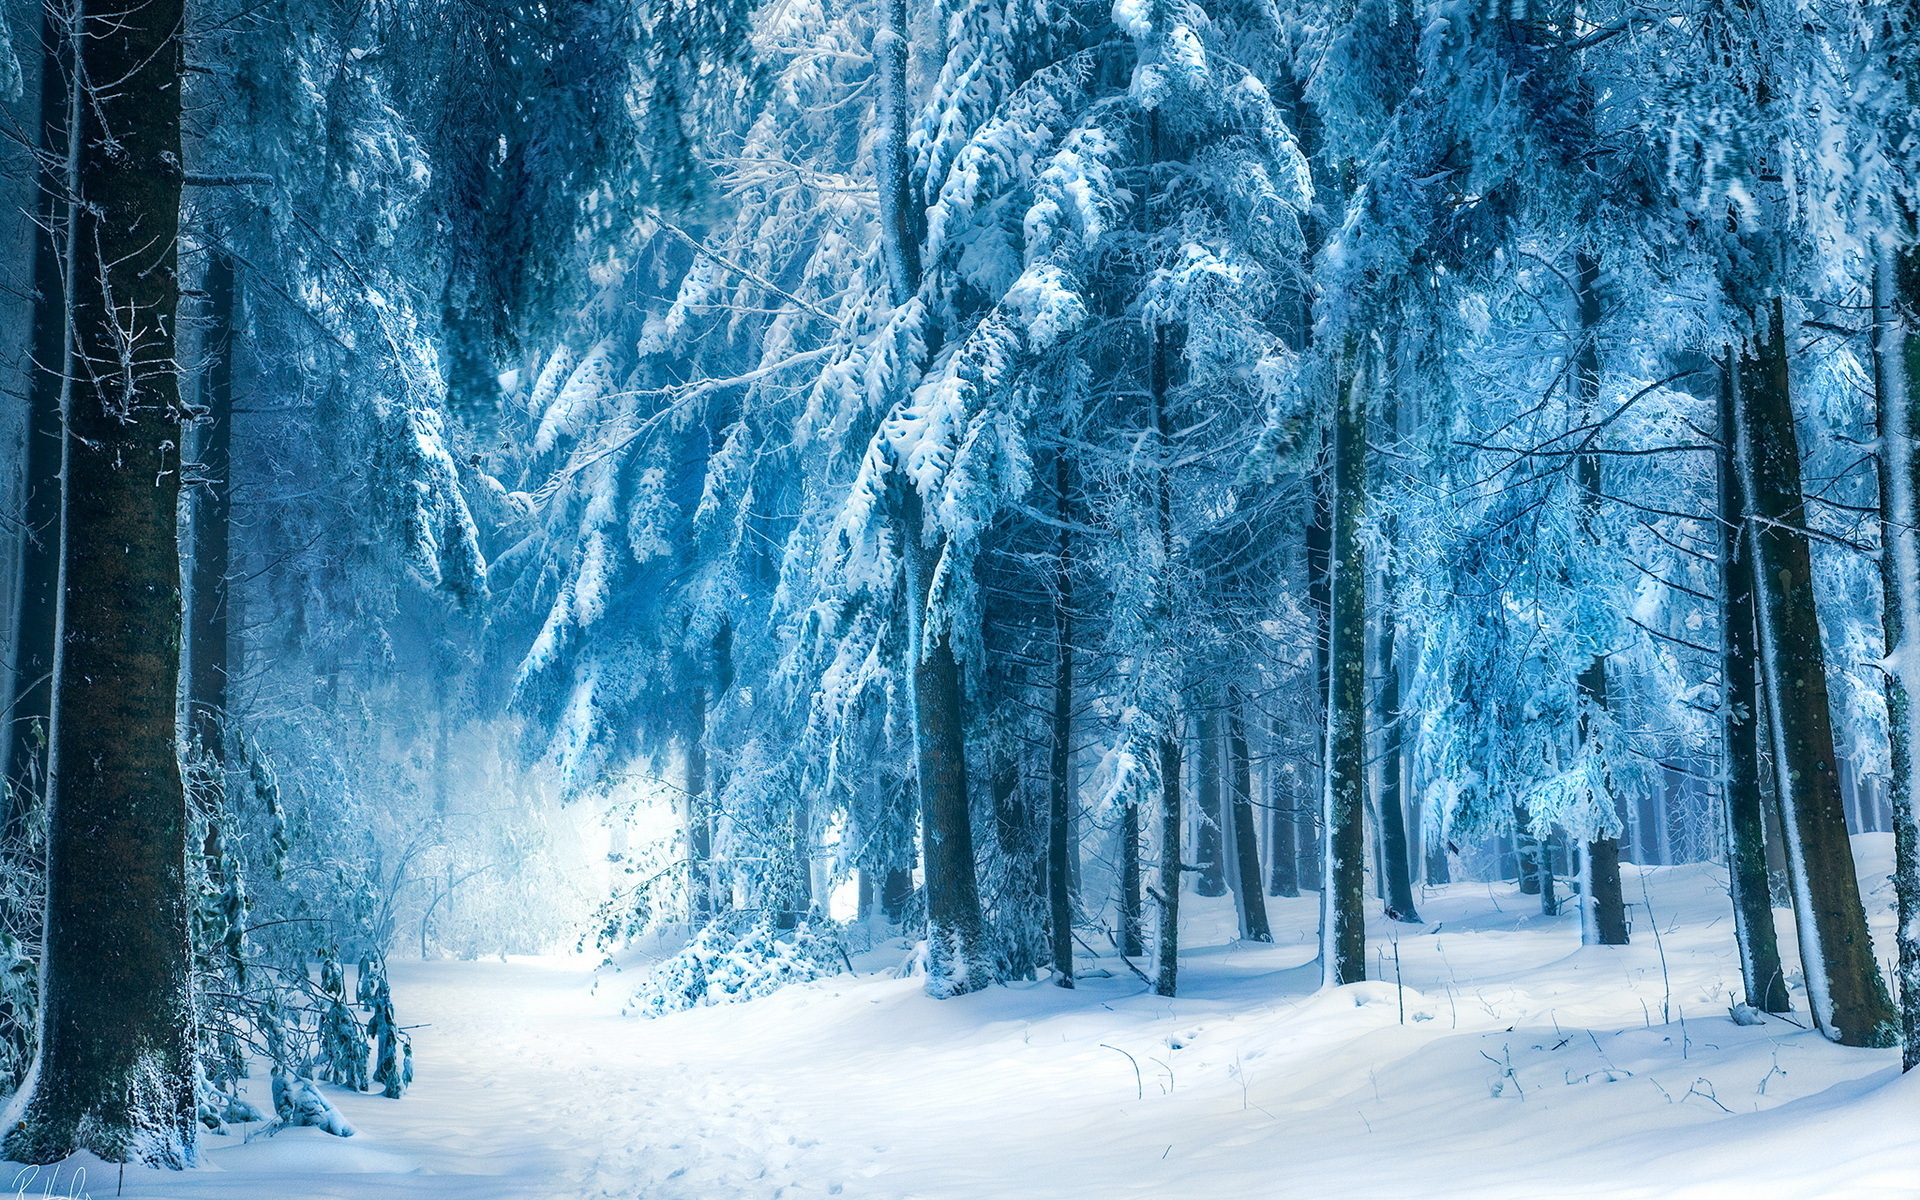 Winter forest. Зимний лес. Сказочный зимний лес. Зимой в лесу. Снежный лес.